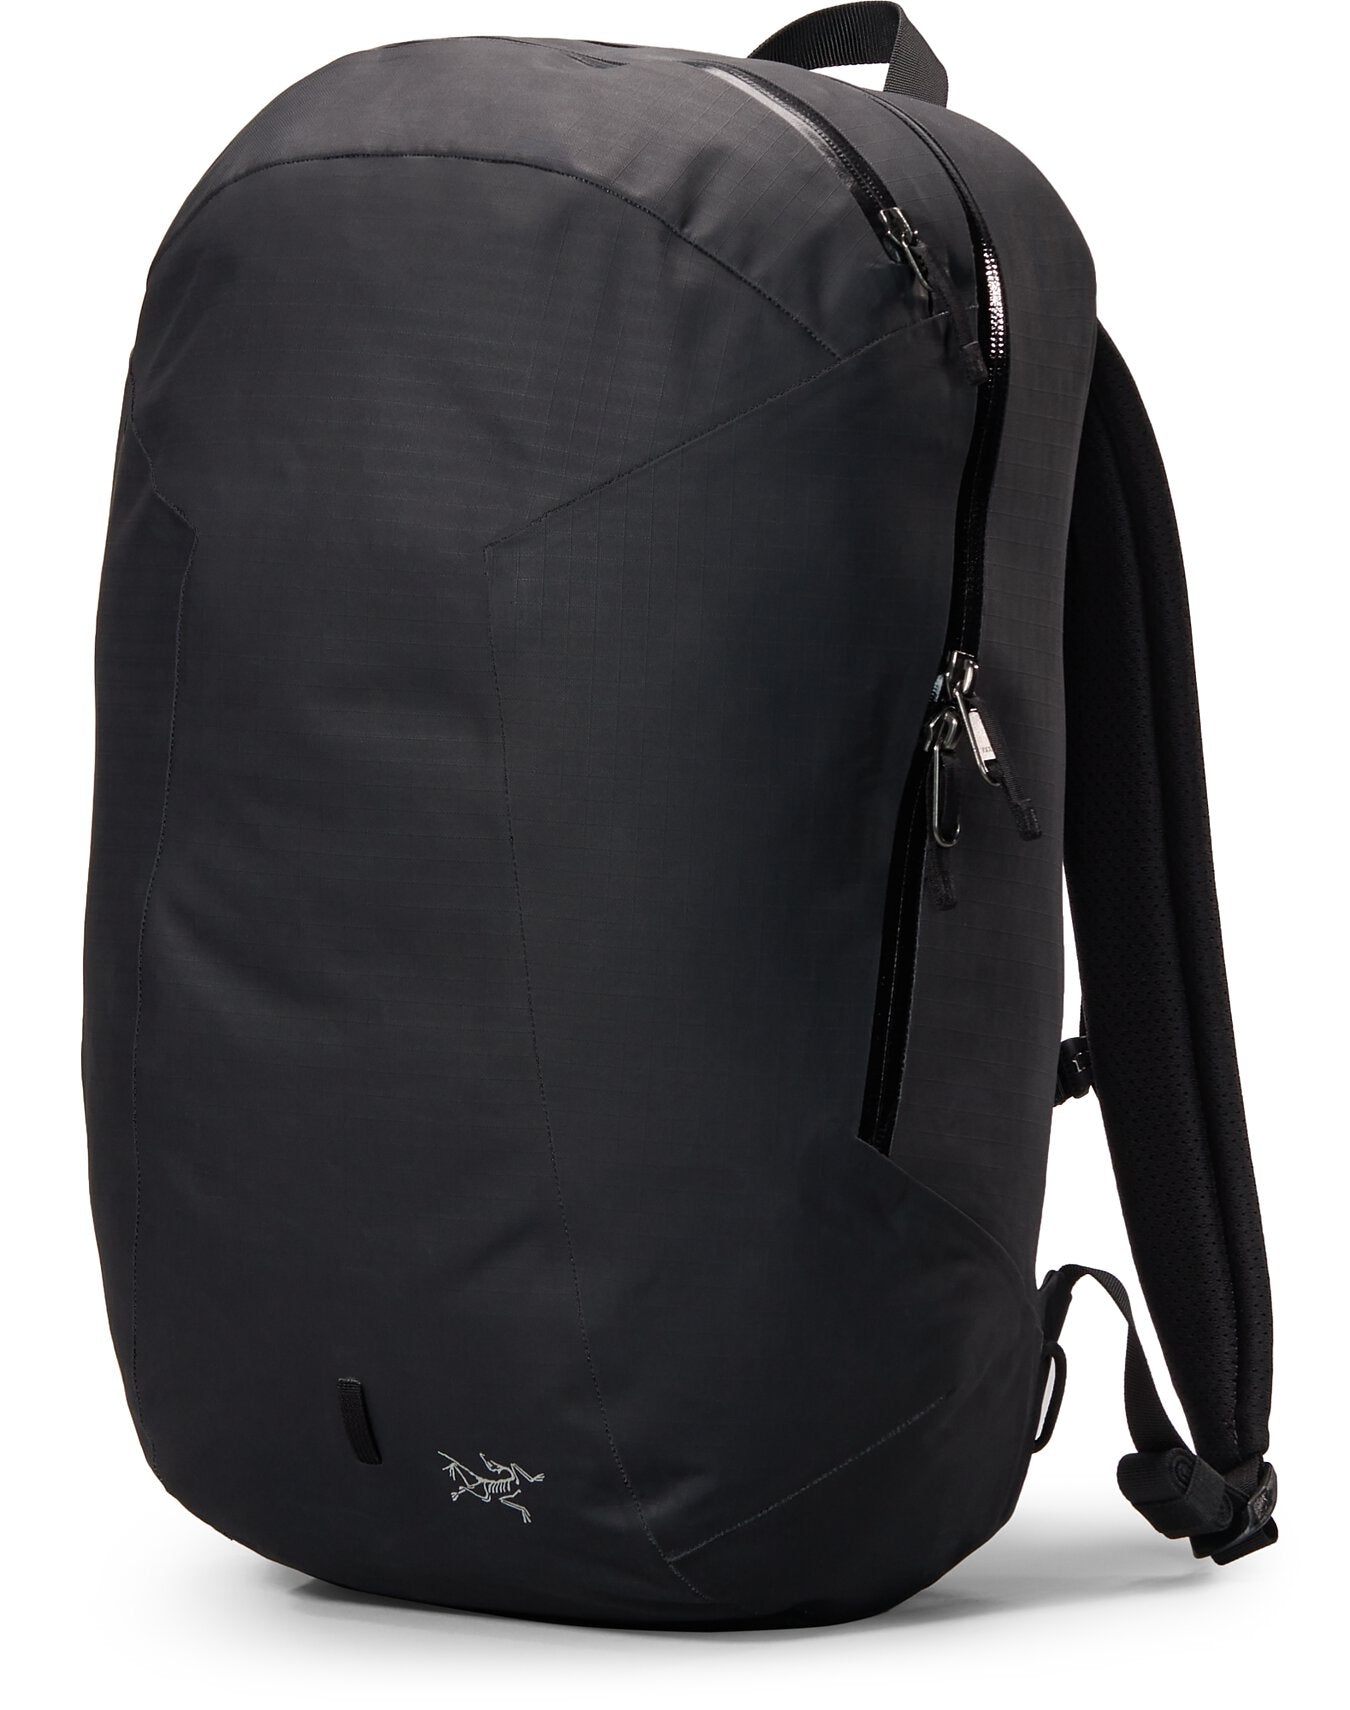 Granville-16-Backpack-Black.jpg